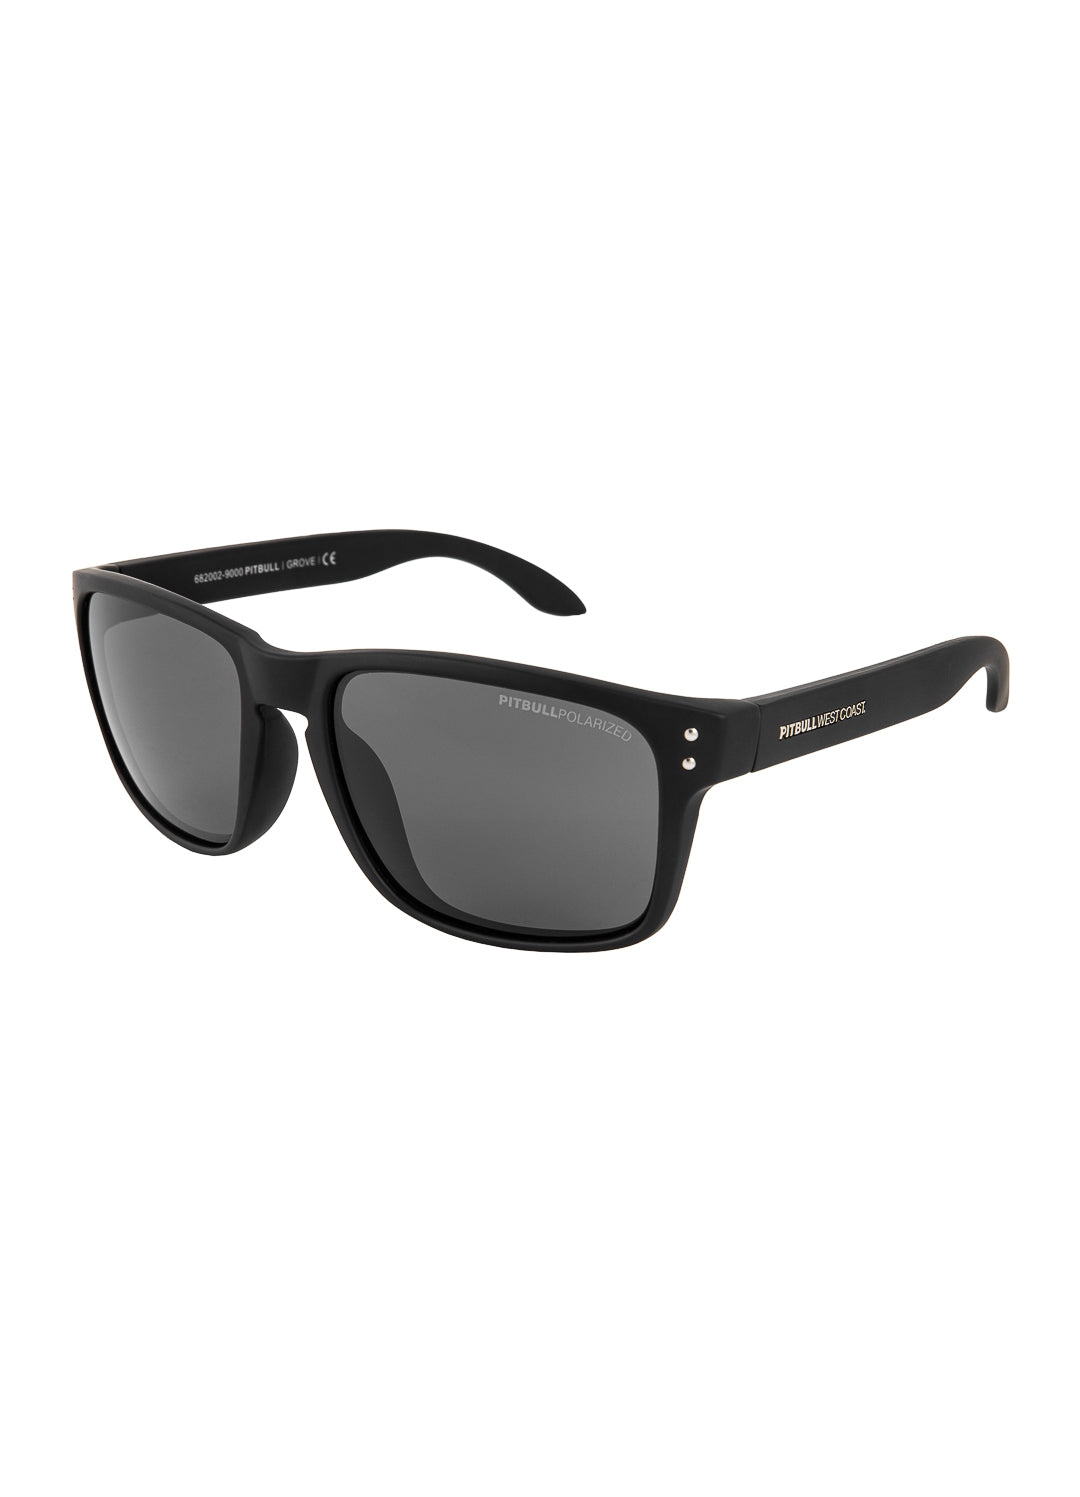 Sunglasses GROVE - Pitbull West Coast International Store 